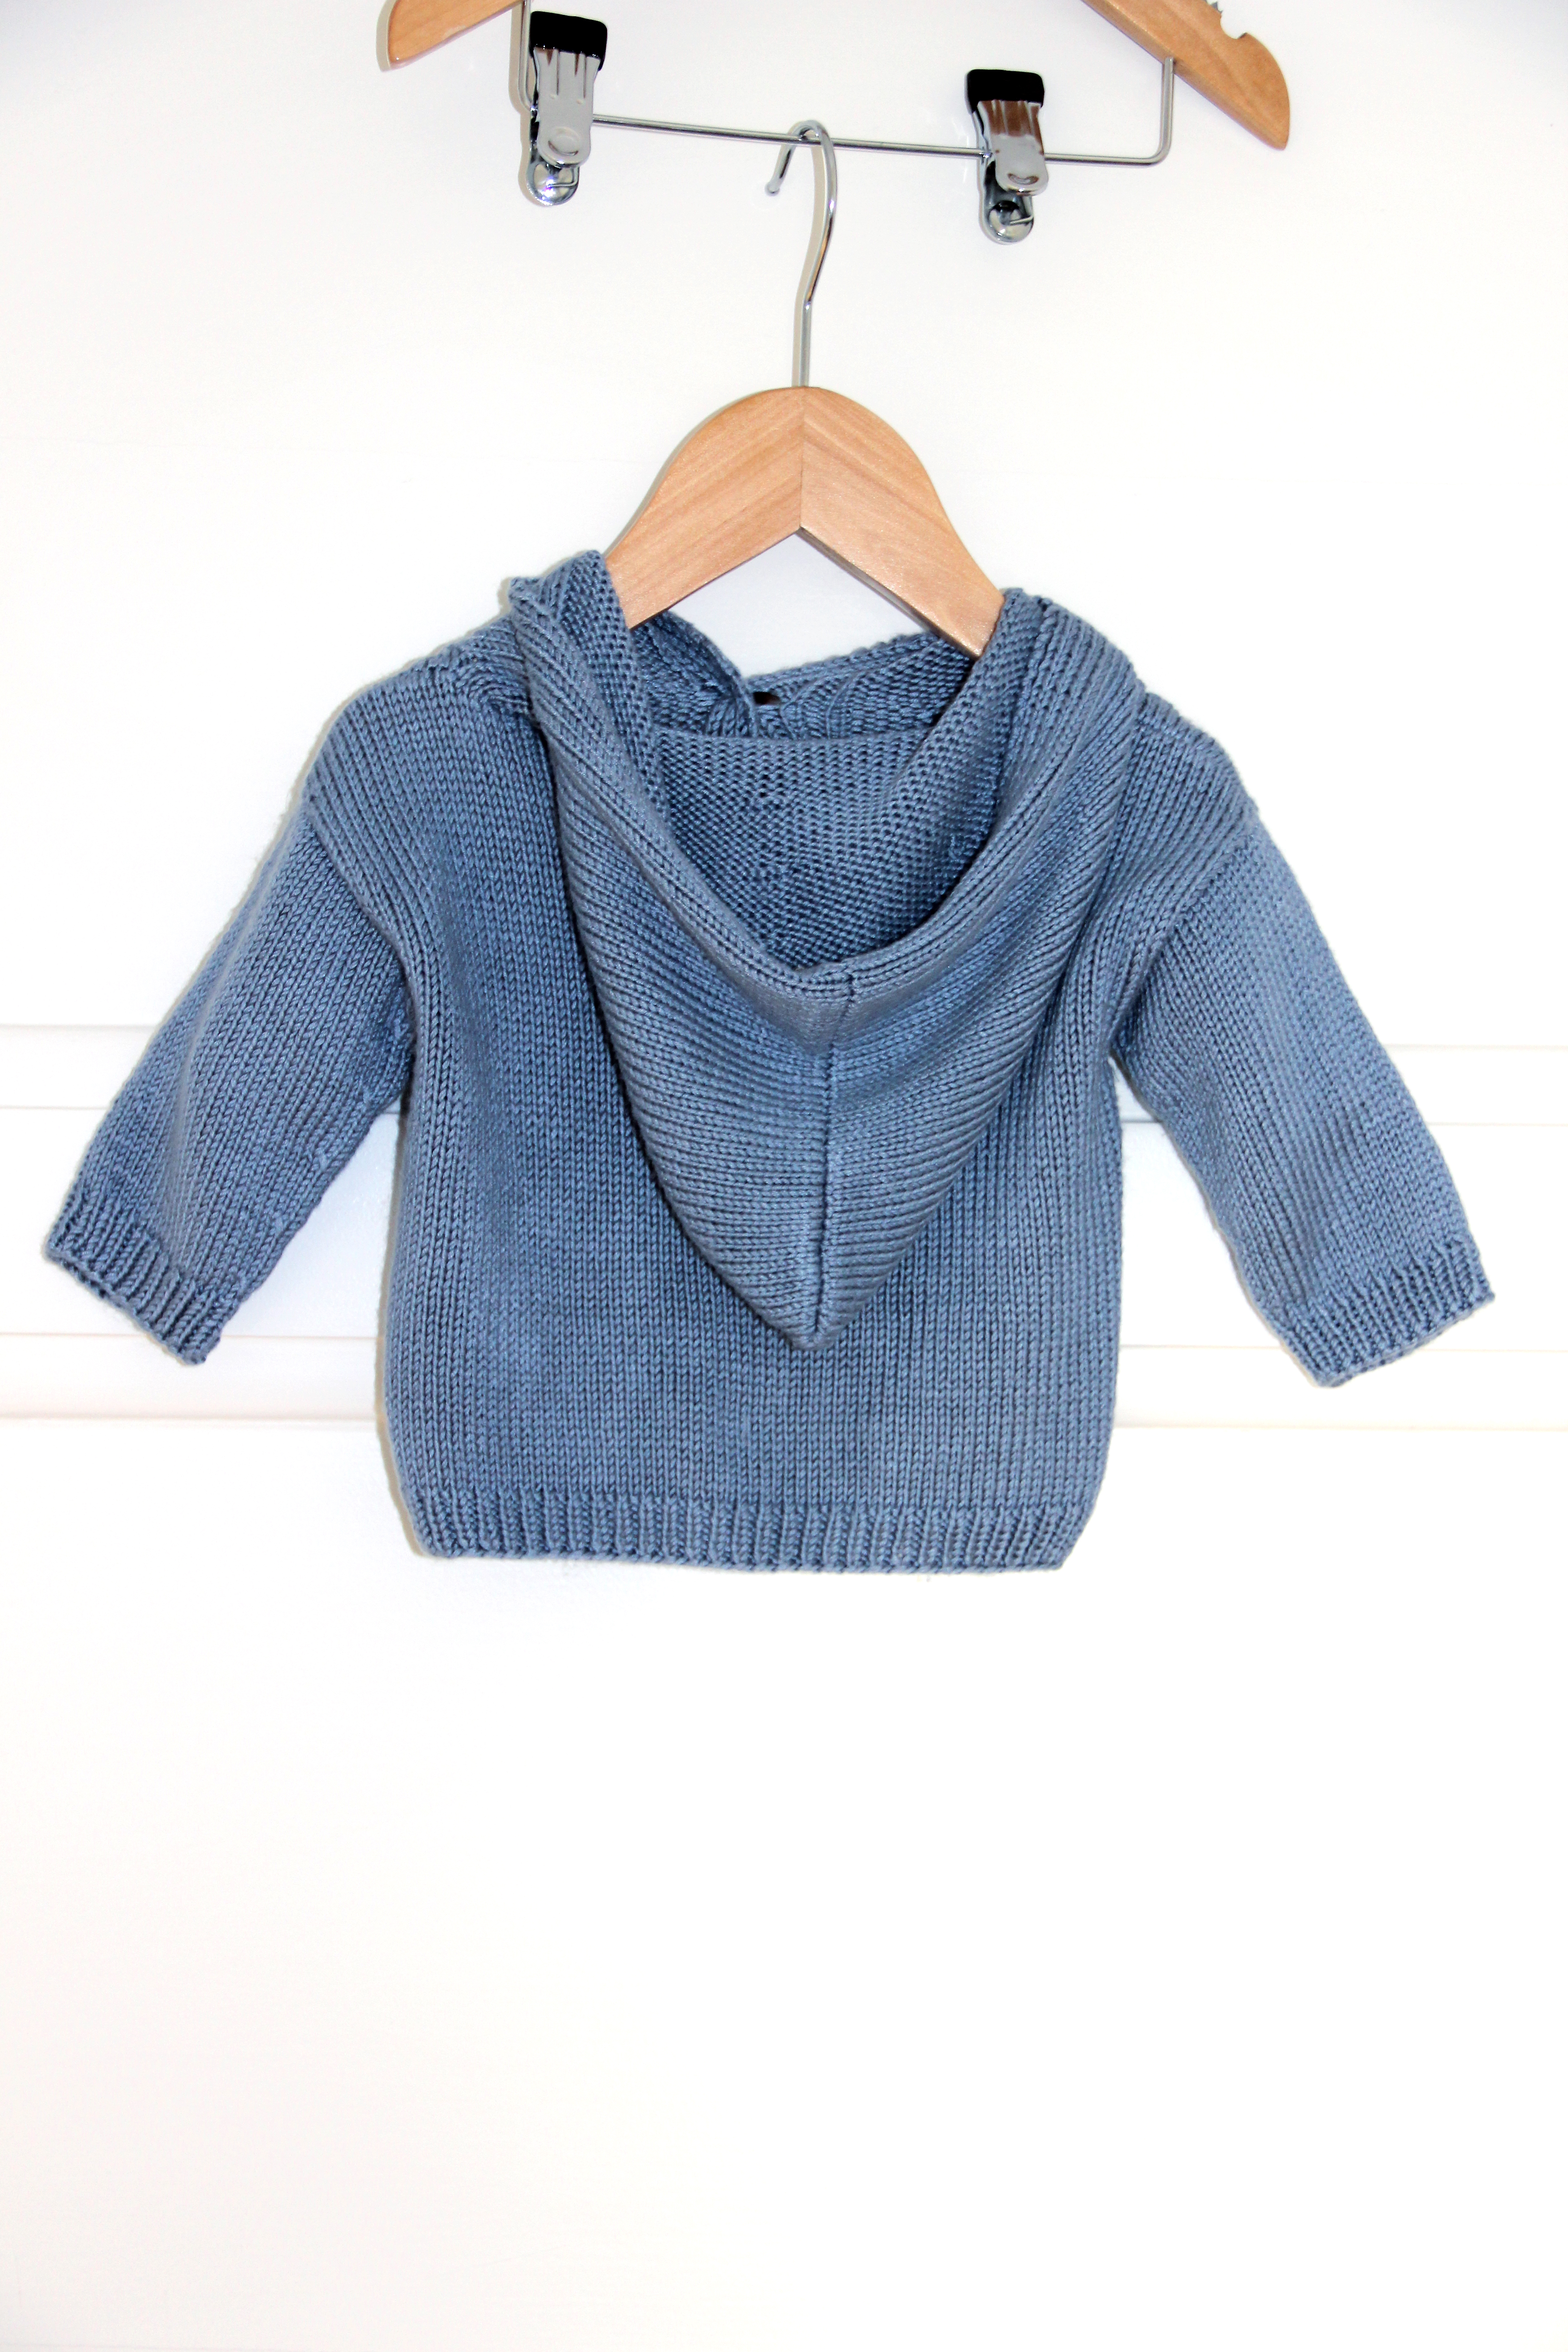 Conform pølse Distribuere Hættetrøje lace - DK - Babytøj - Go handmade